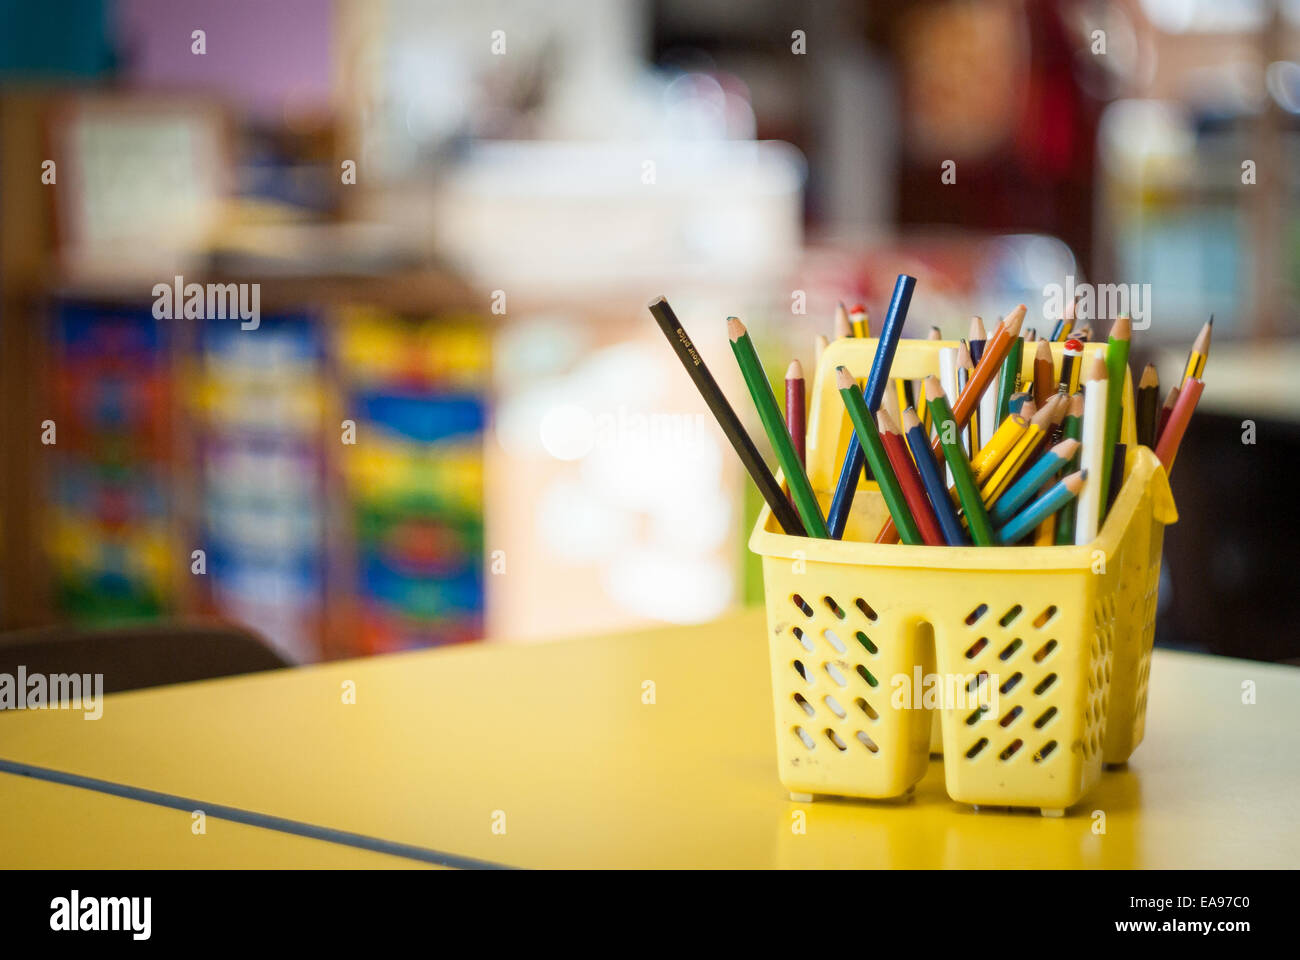 Classroom pencils in an empty school classroom. Stock Photo